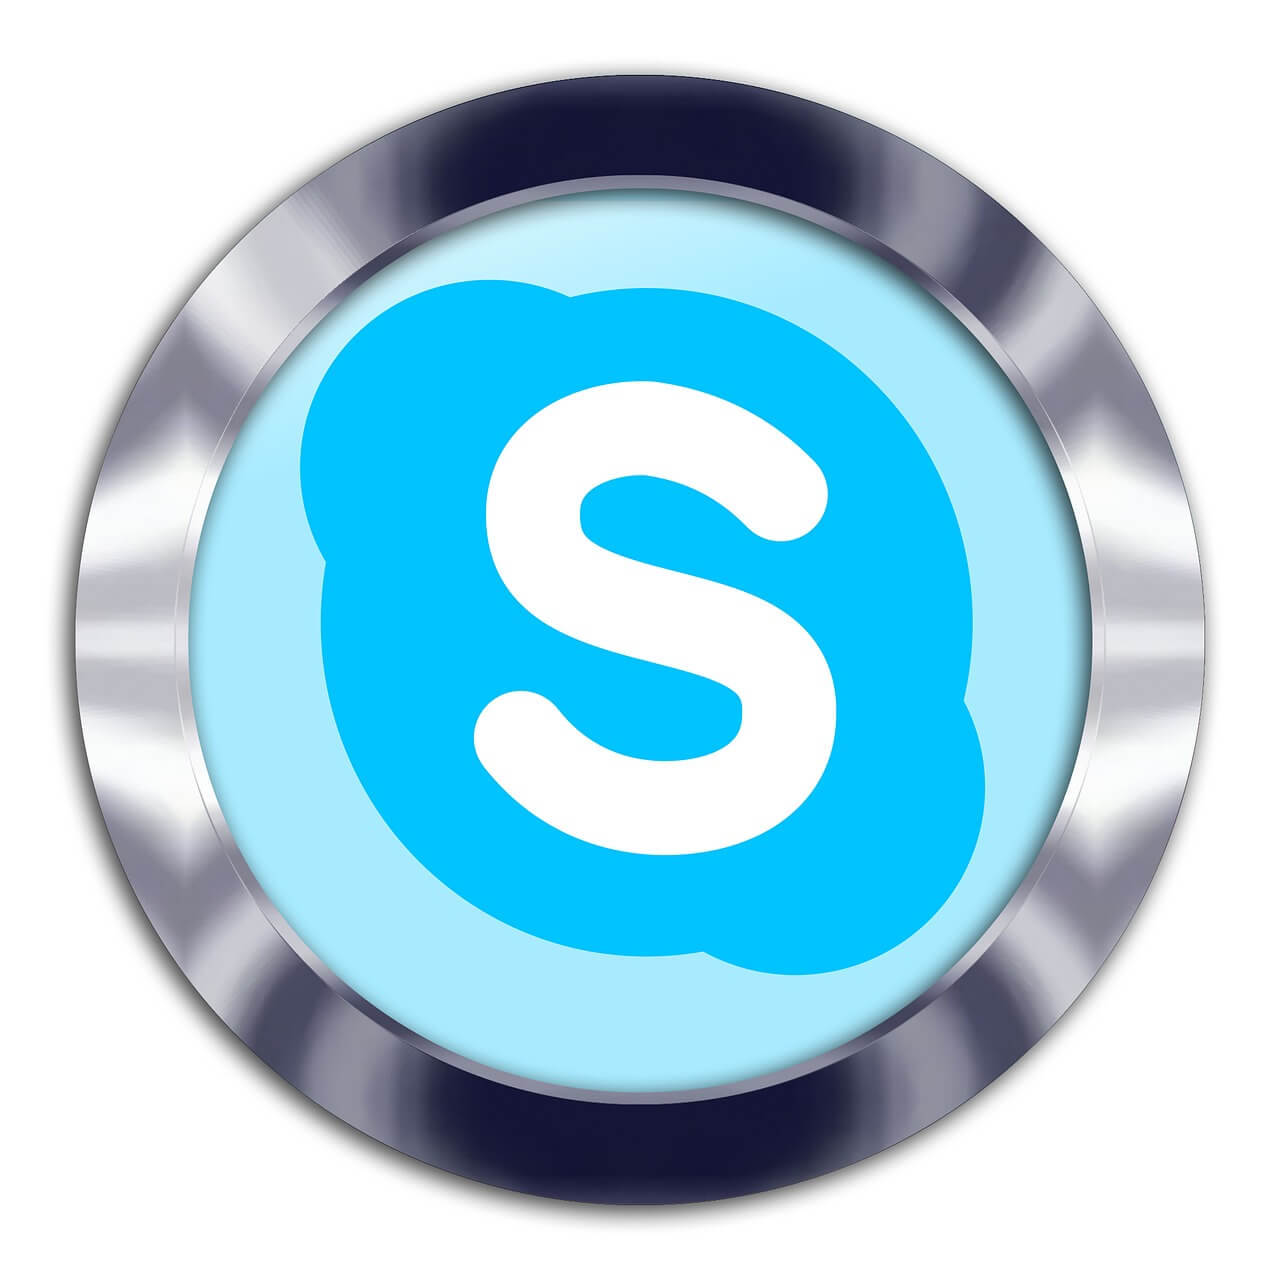 microsoft verification code skype